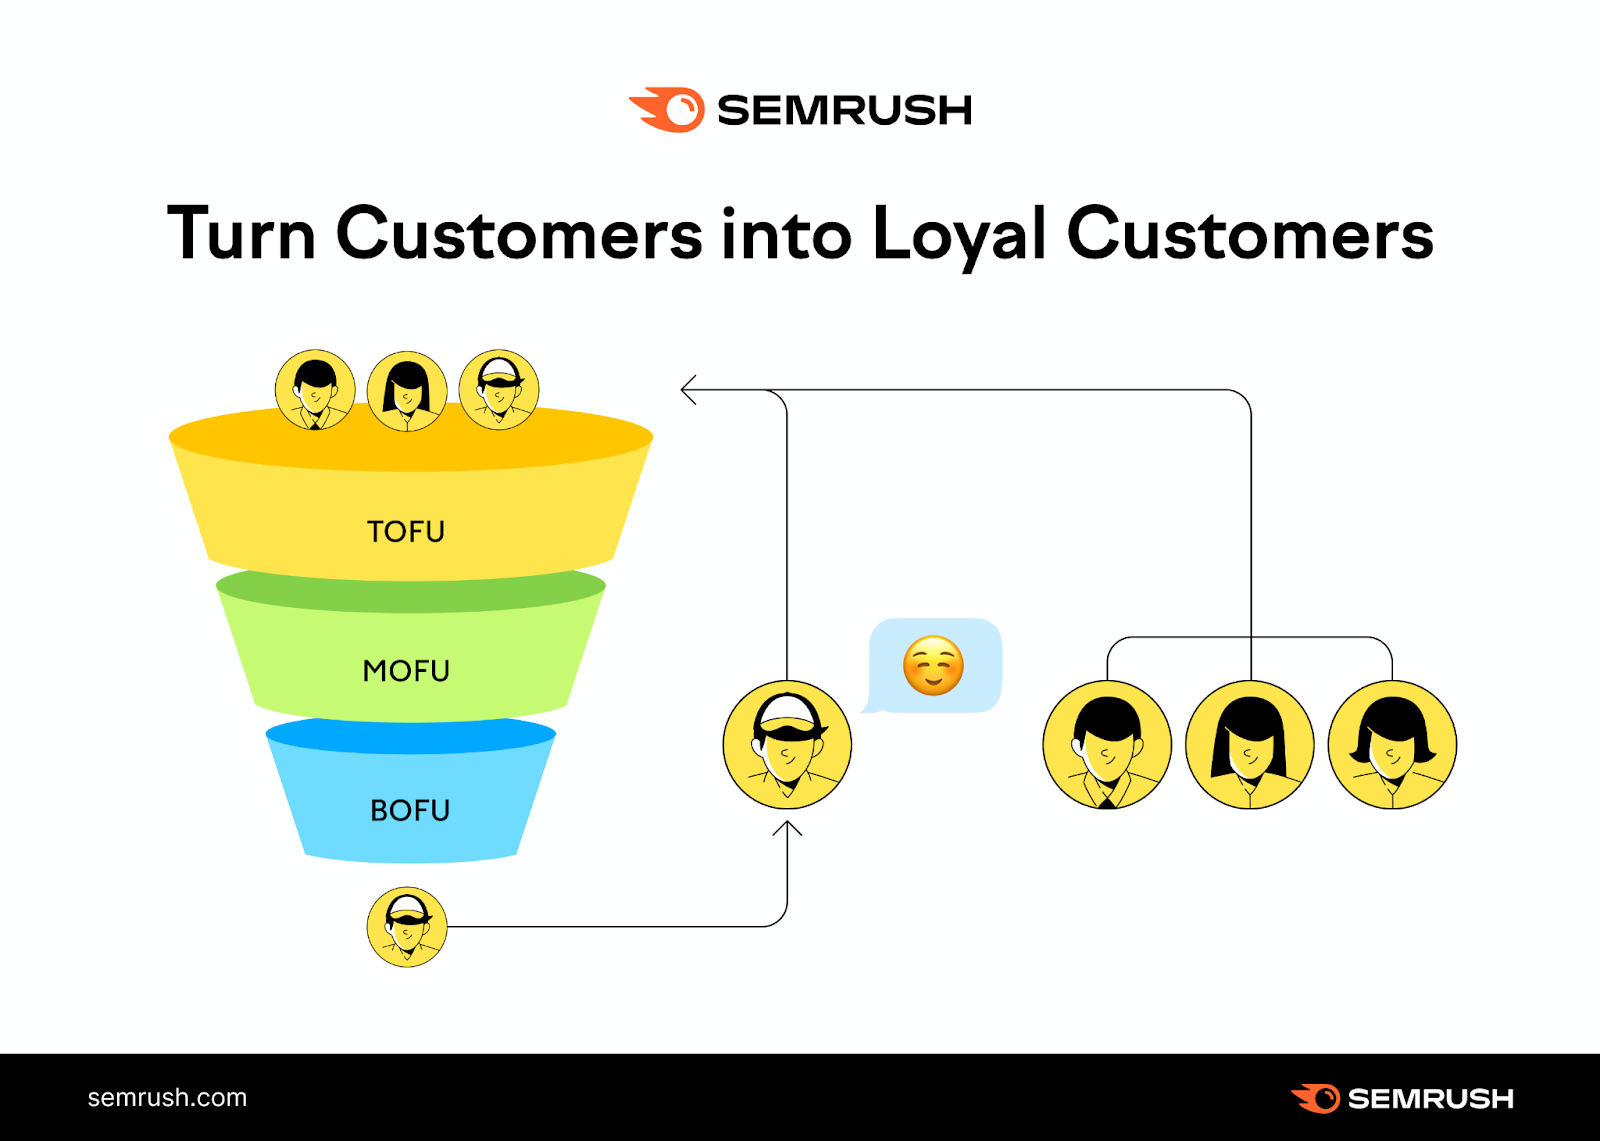 Turn customers into loyal customers